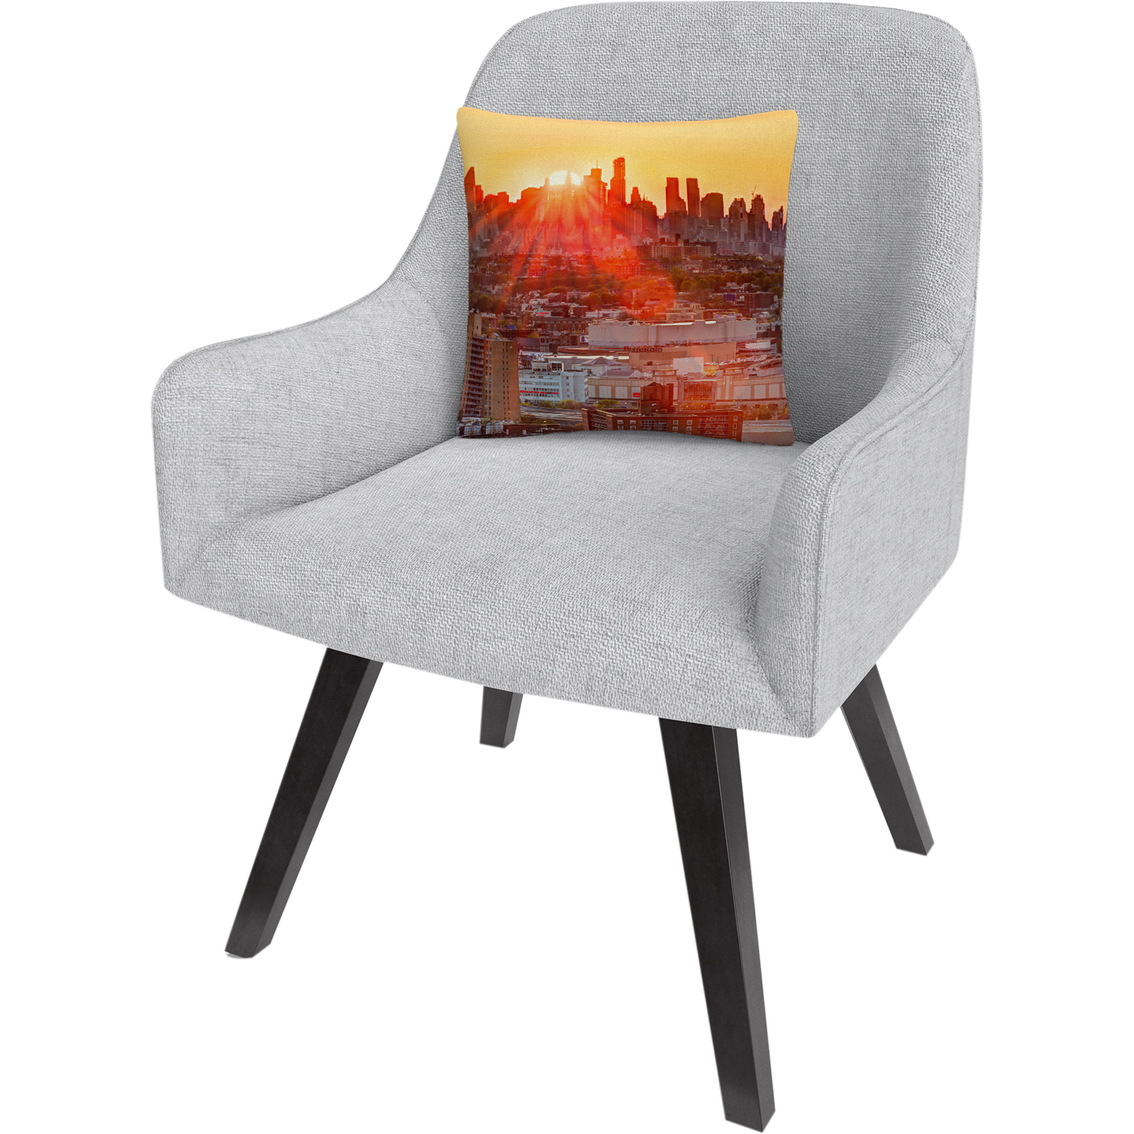 Trademark Fine Art Midtown Sunset Orange Cityscape Decorative Throw Pillow - Image 2 of 2